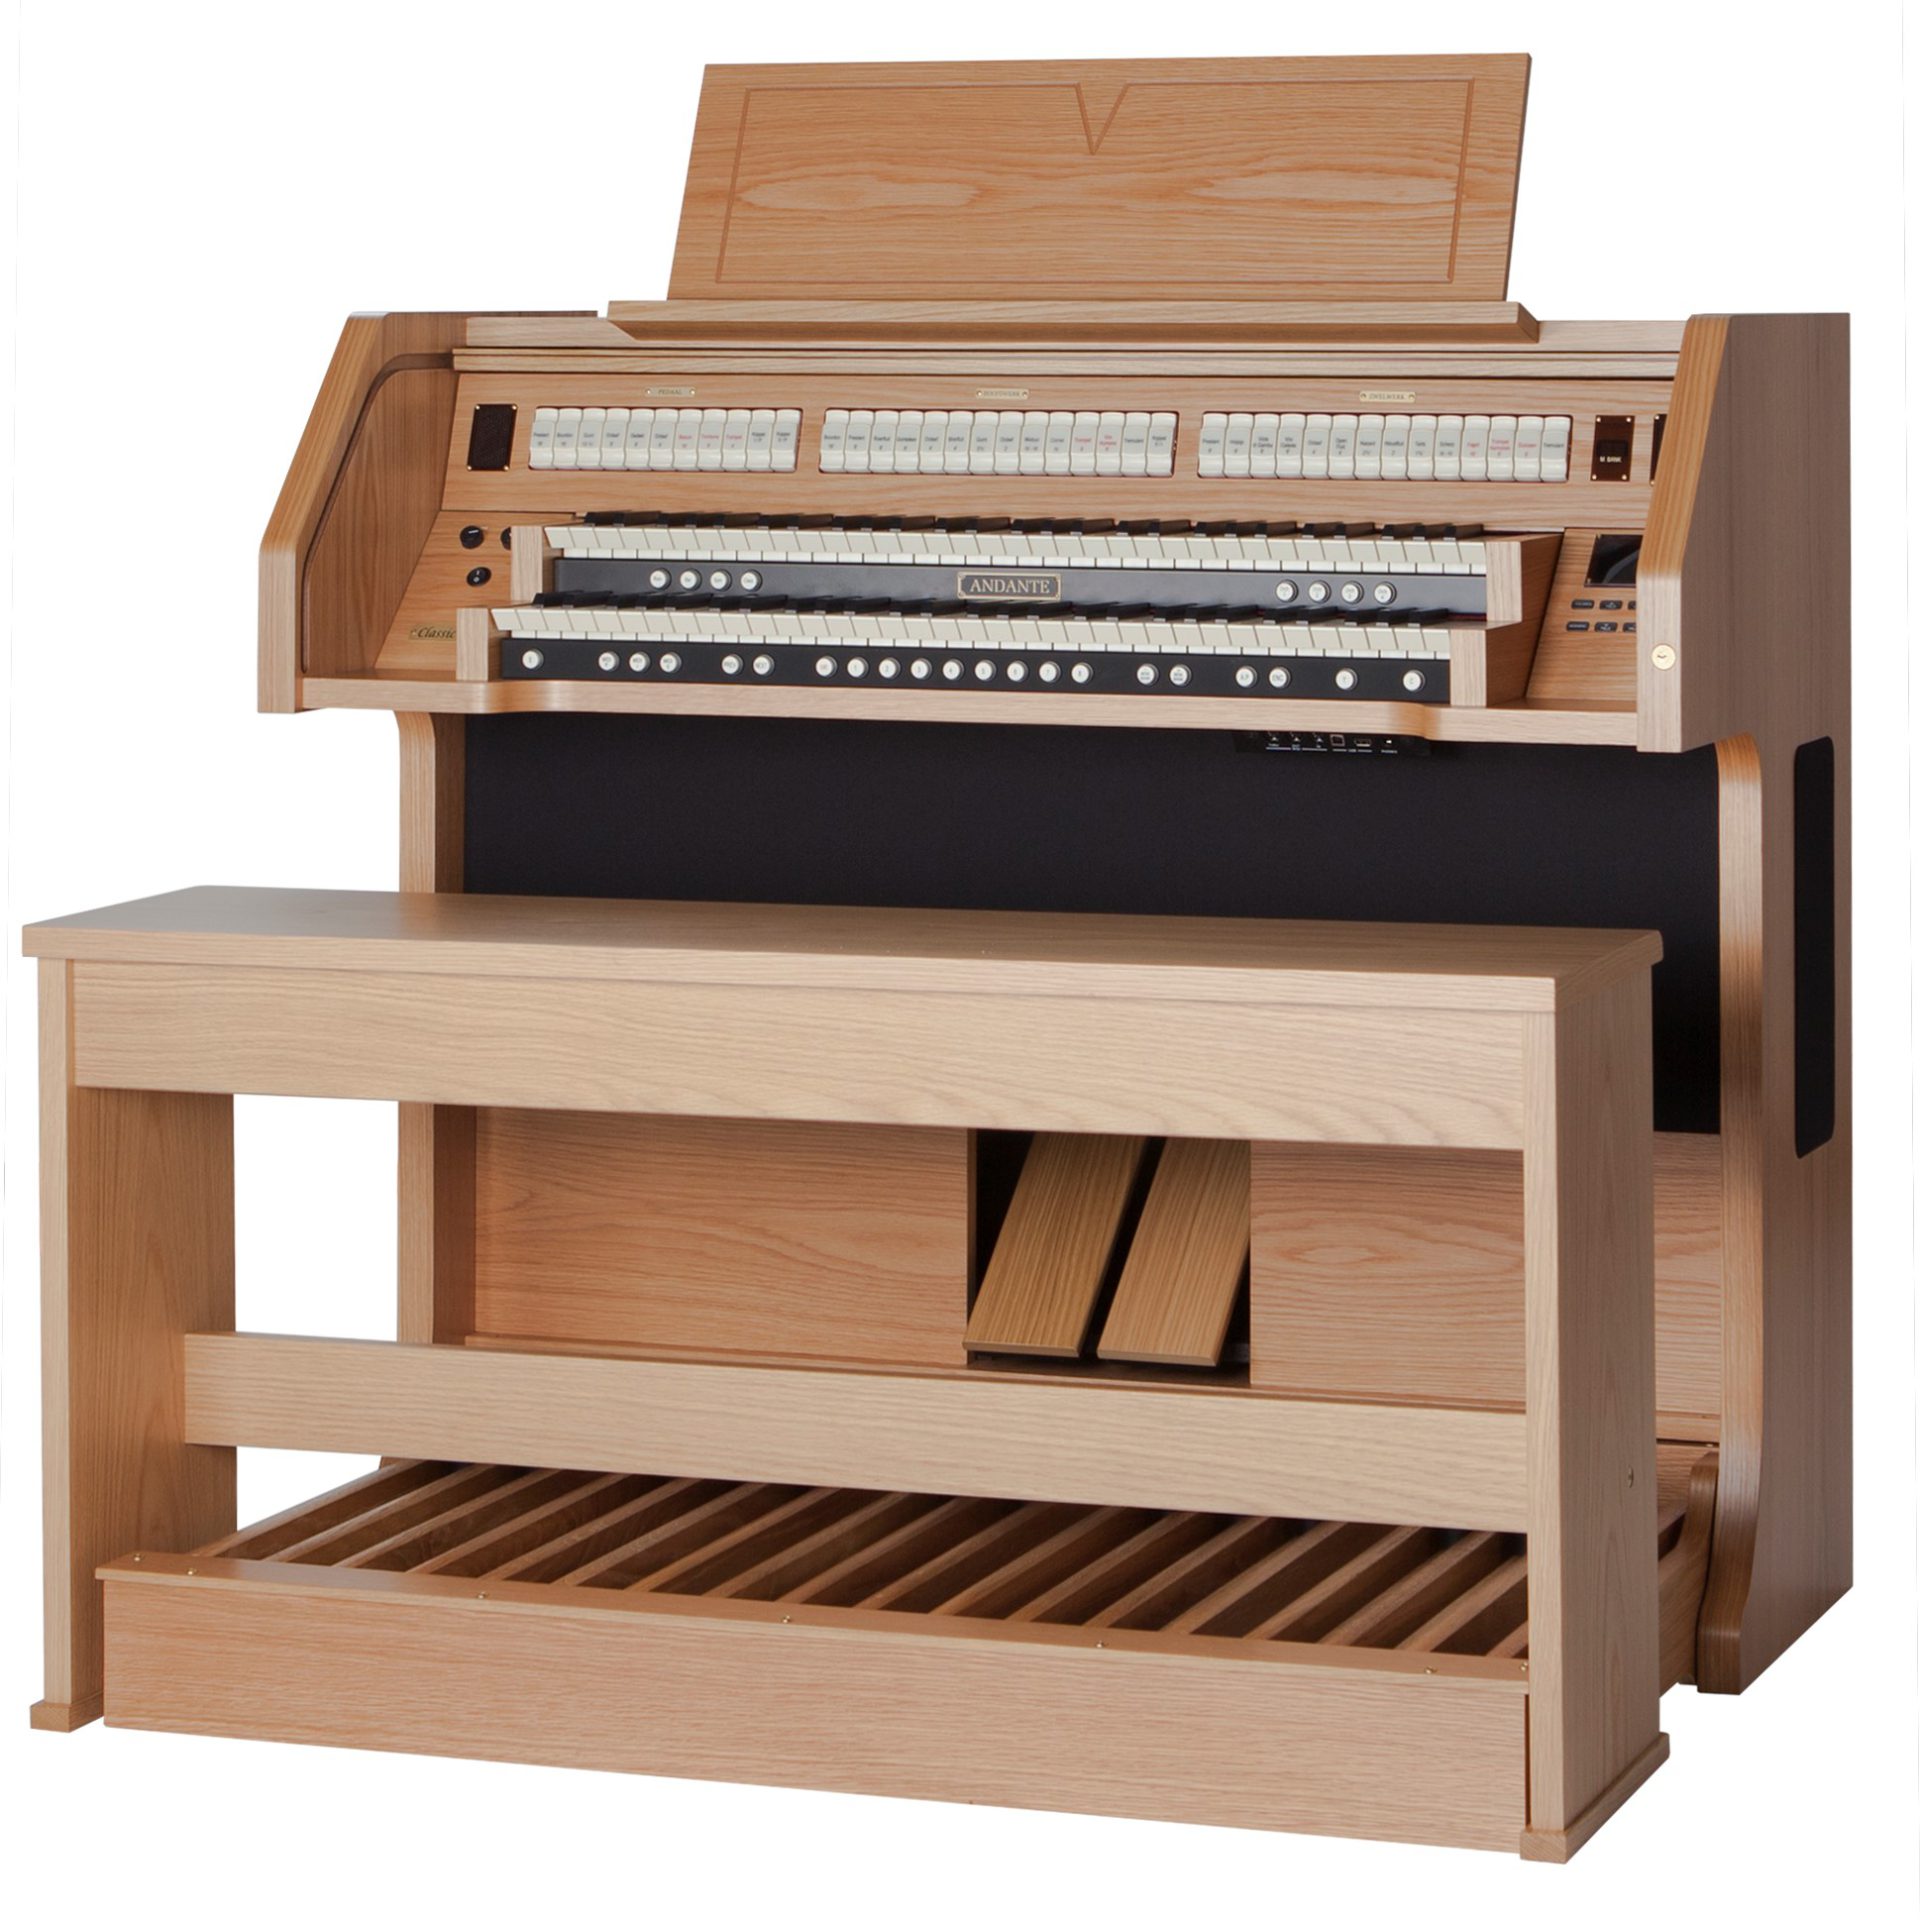 Andante Classic 45 Andante Orgels